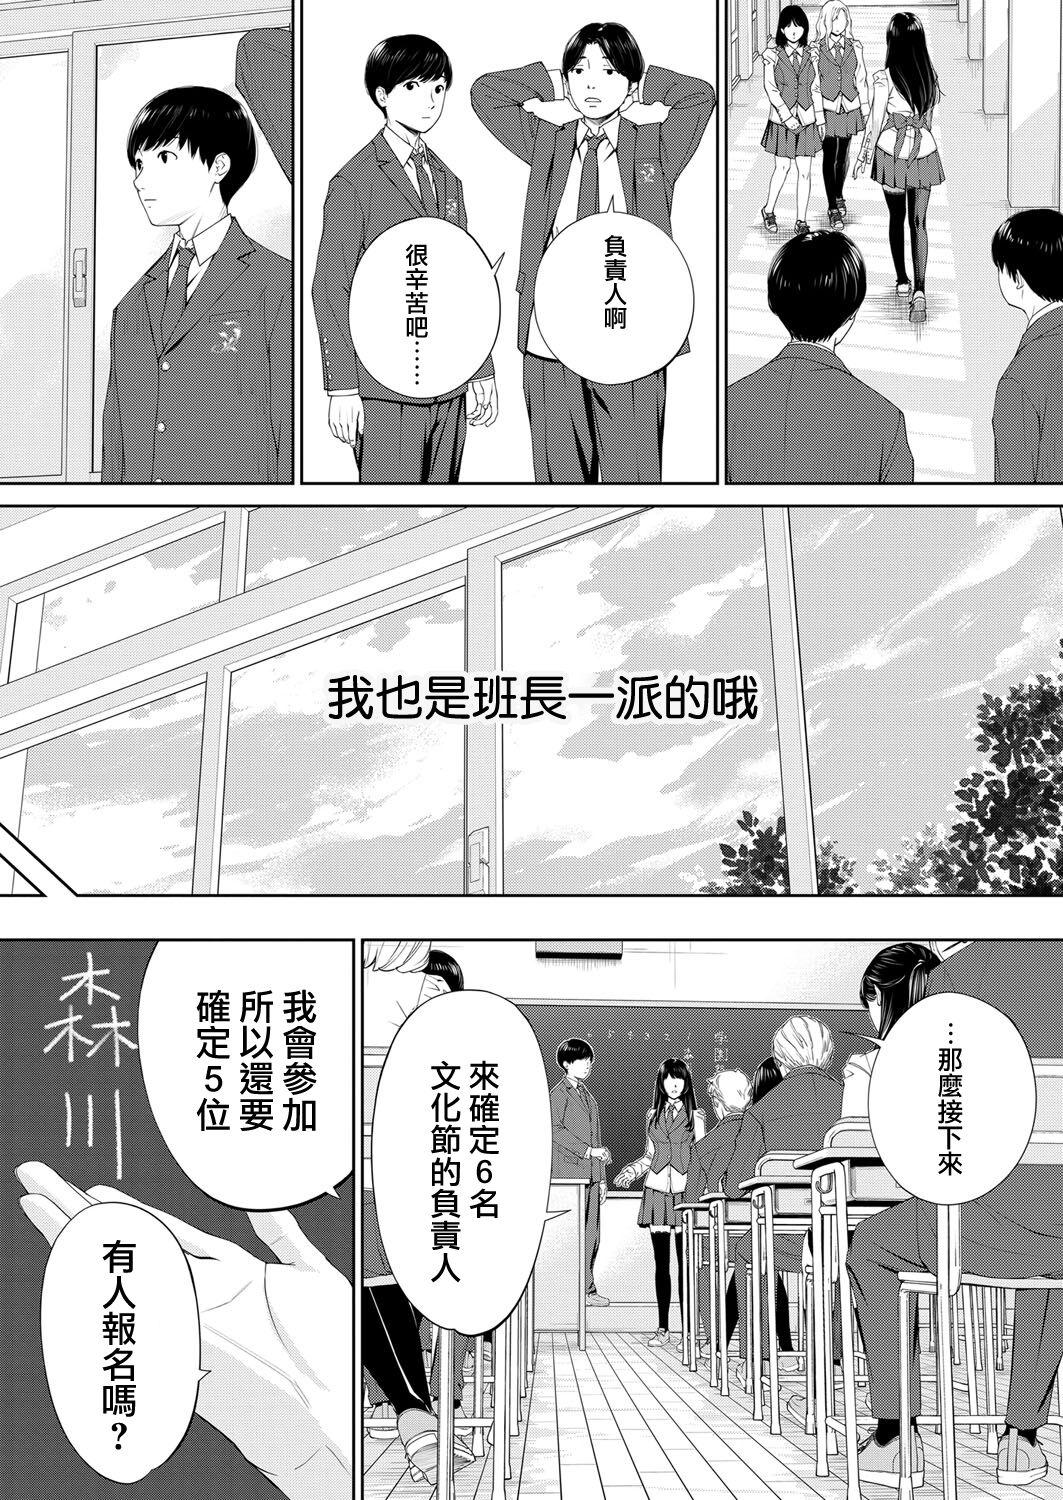 Missionary Yuzaidesu #1 |有罪 Ch.1 Beach - Page 1